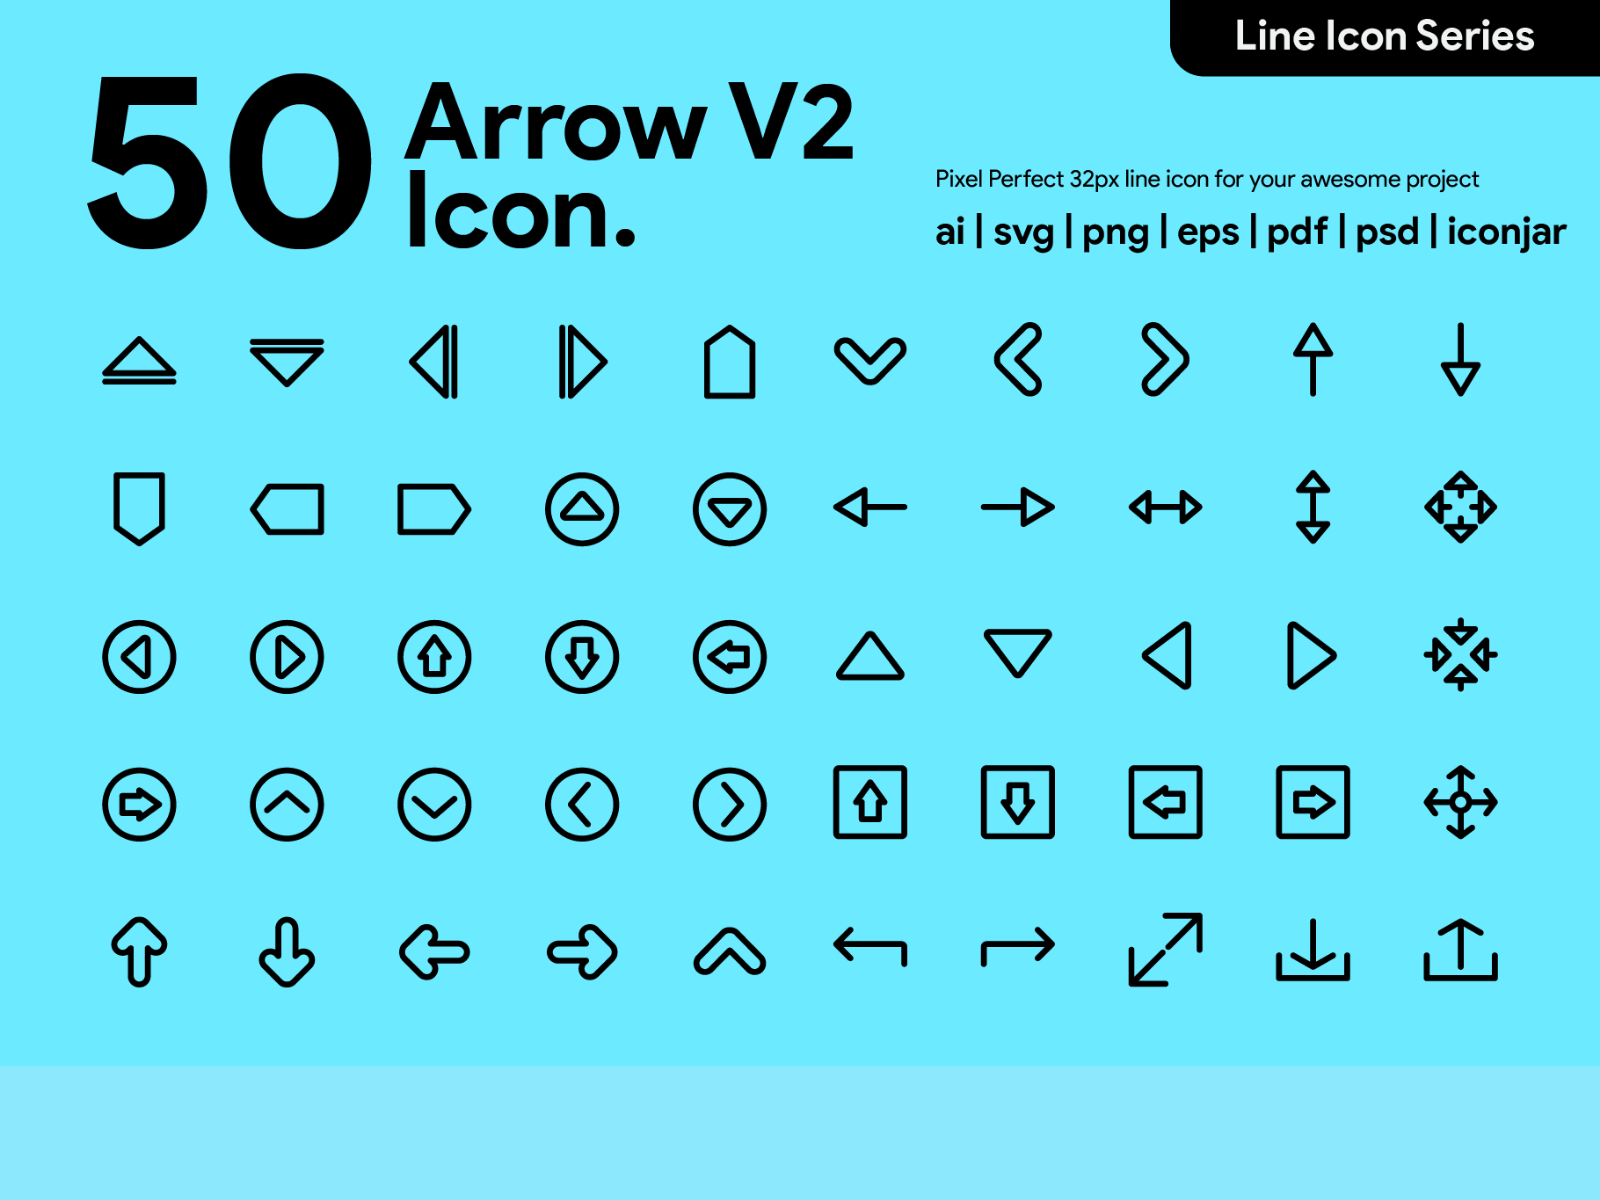 App icons design idea #234: Kawaicon - 50 Arrow Line Icon